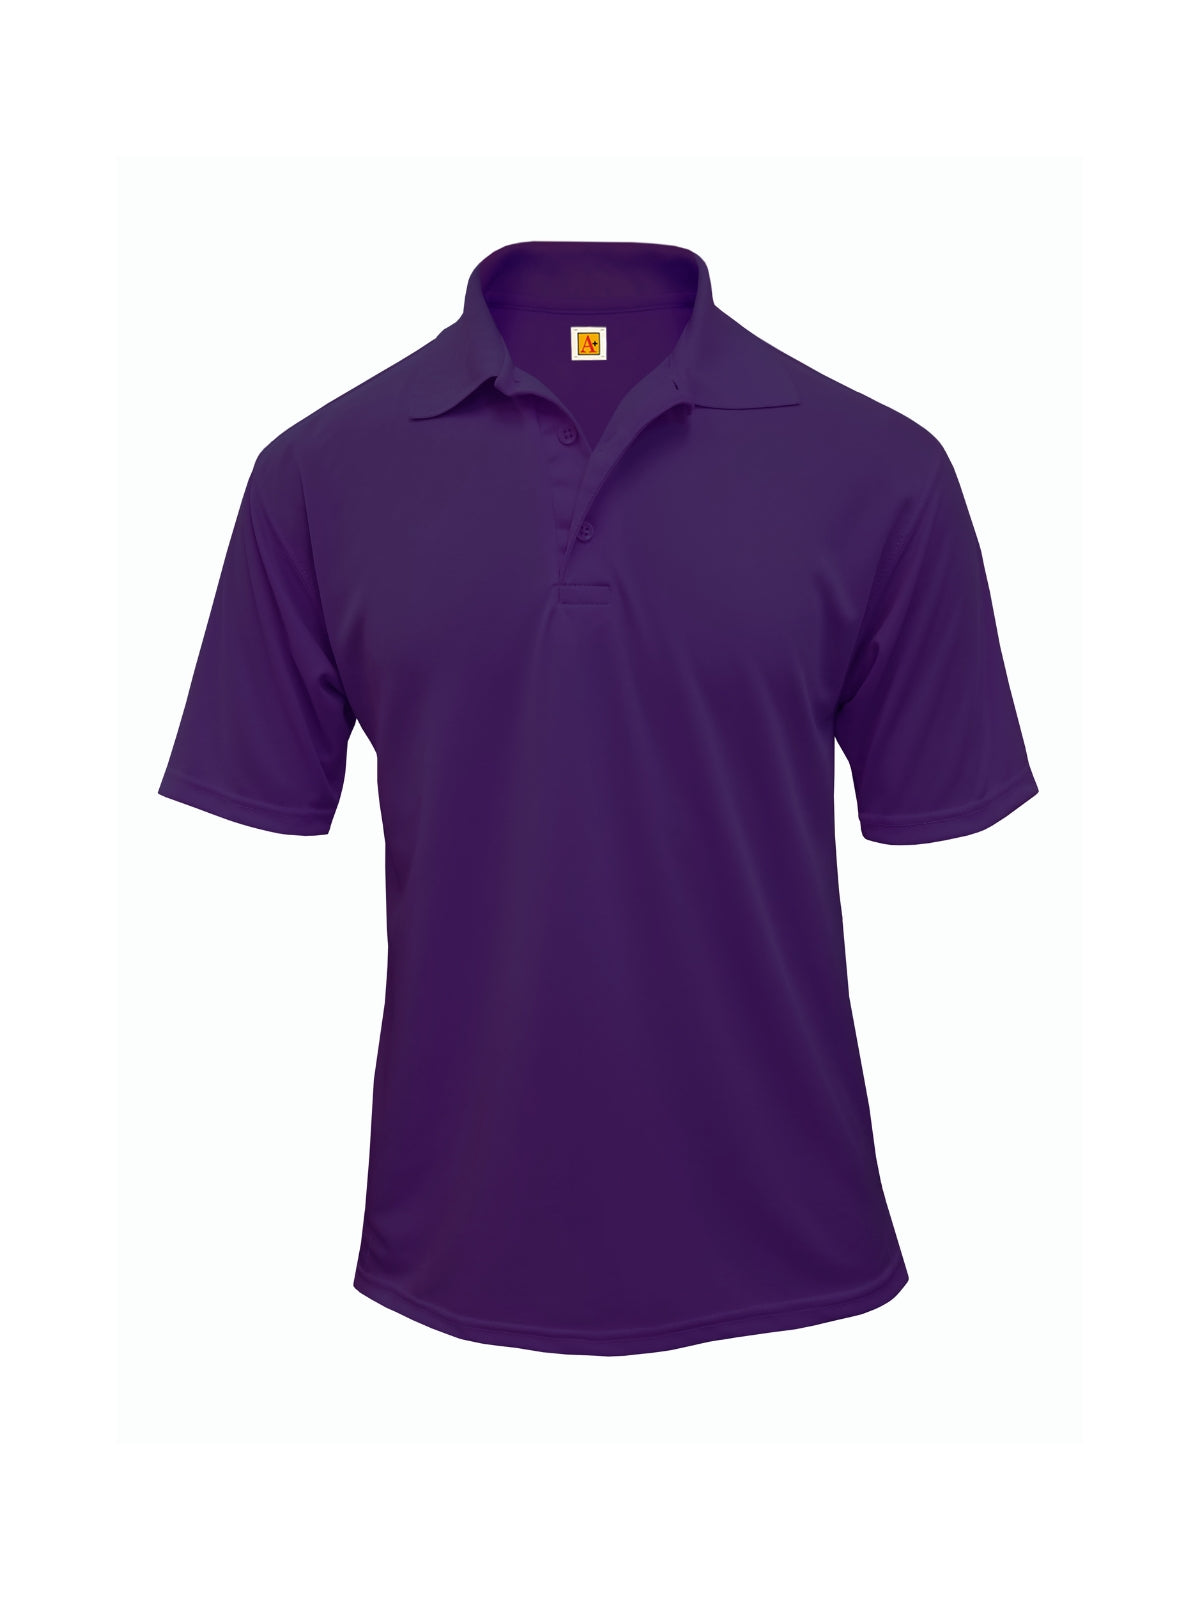 Unisex Short Sleeve Dri-Fit Polo - 8953 - Purple